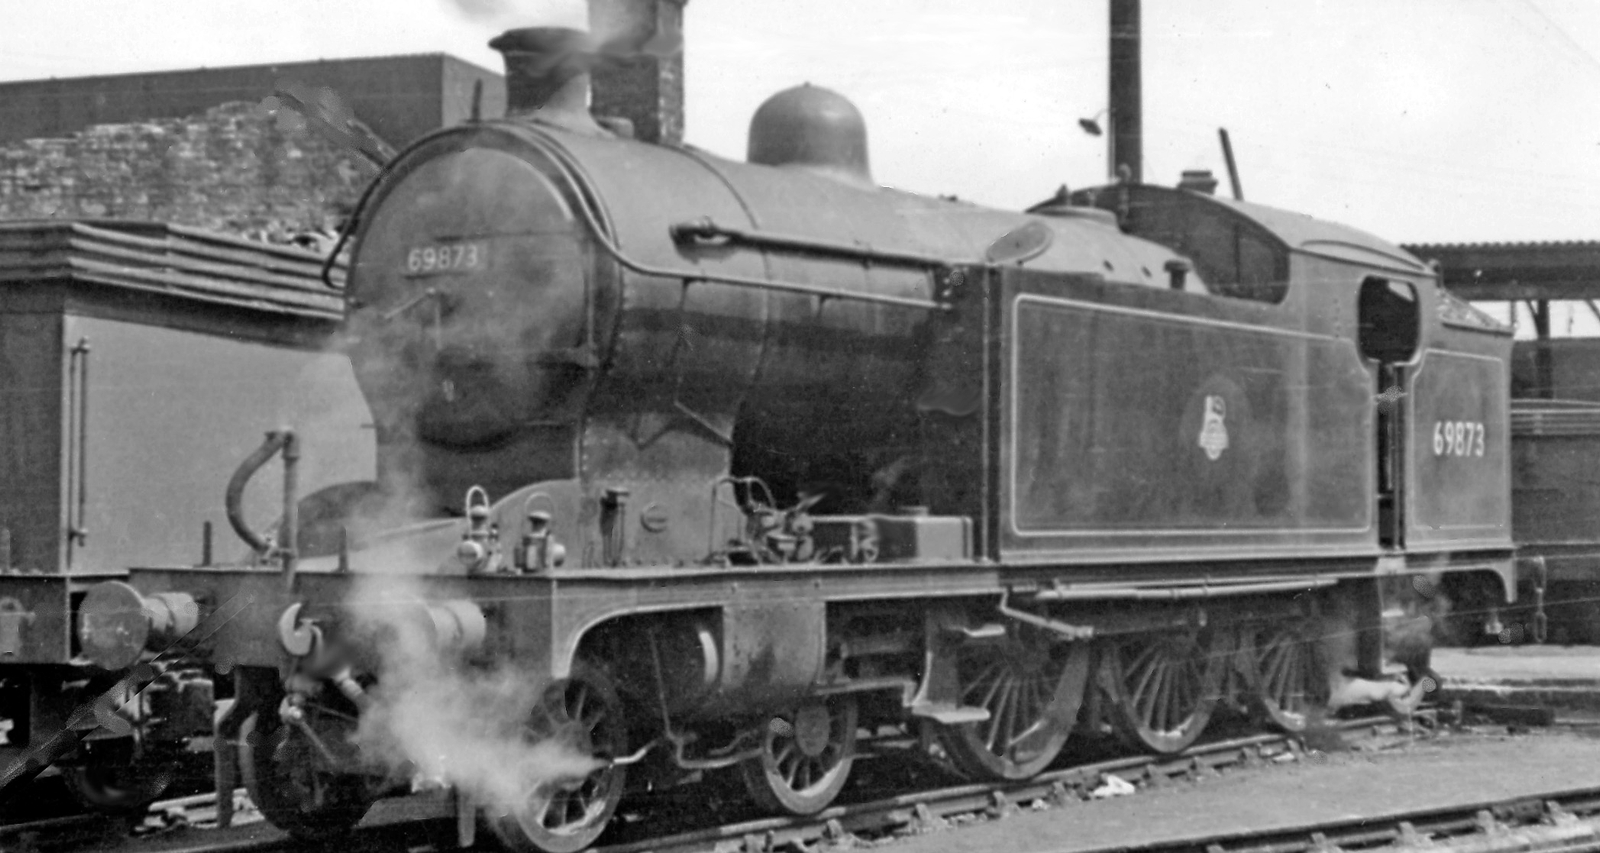 British Railways No. 69873 in June 1954 at Middlesbrough depot